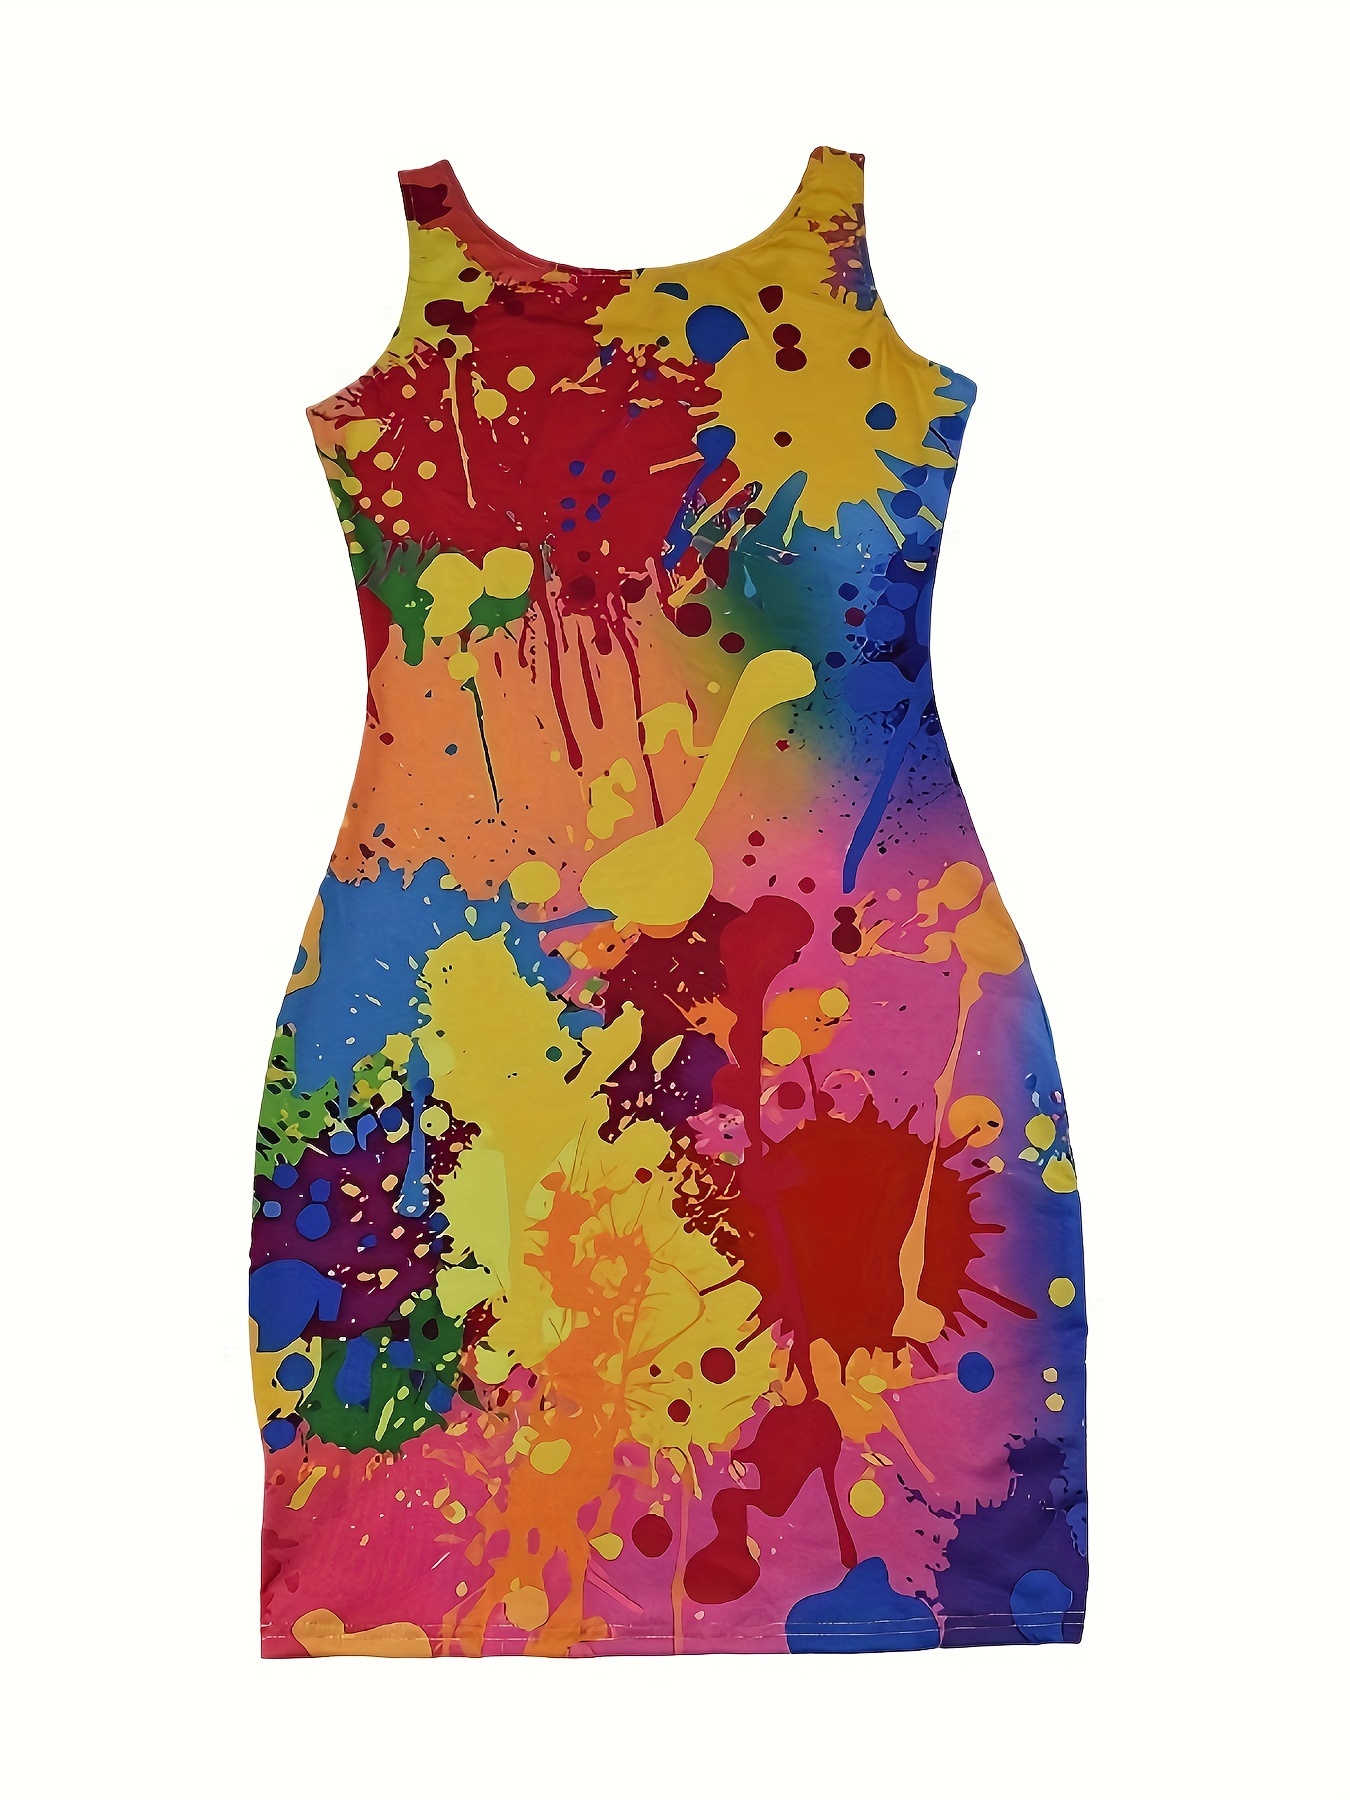 graffiti print bodycon tank dress club wear sleeveless midi dress womens clothing details 0